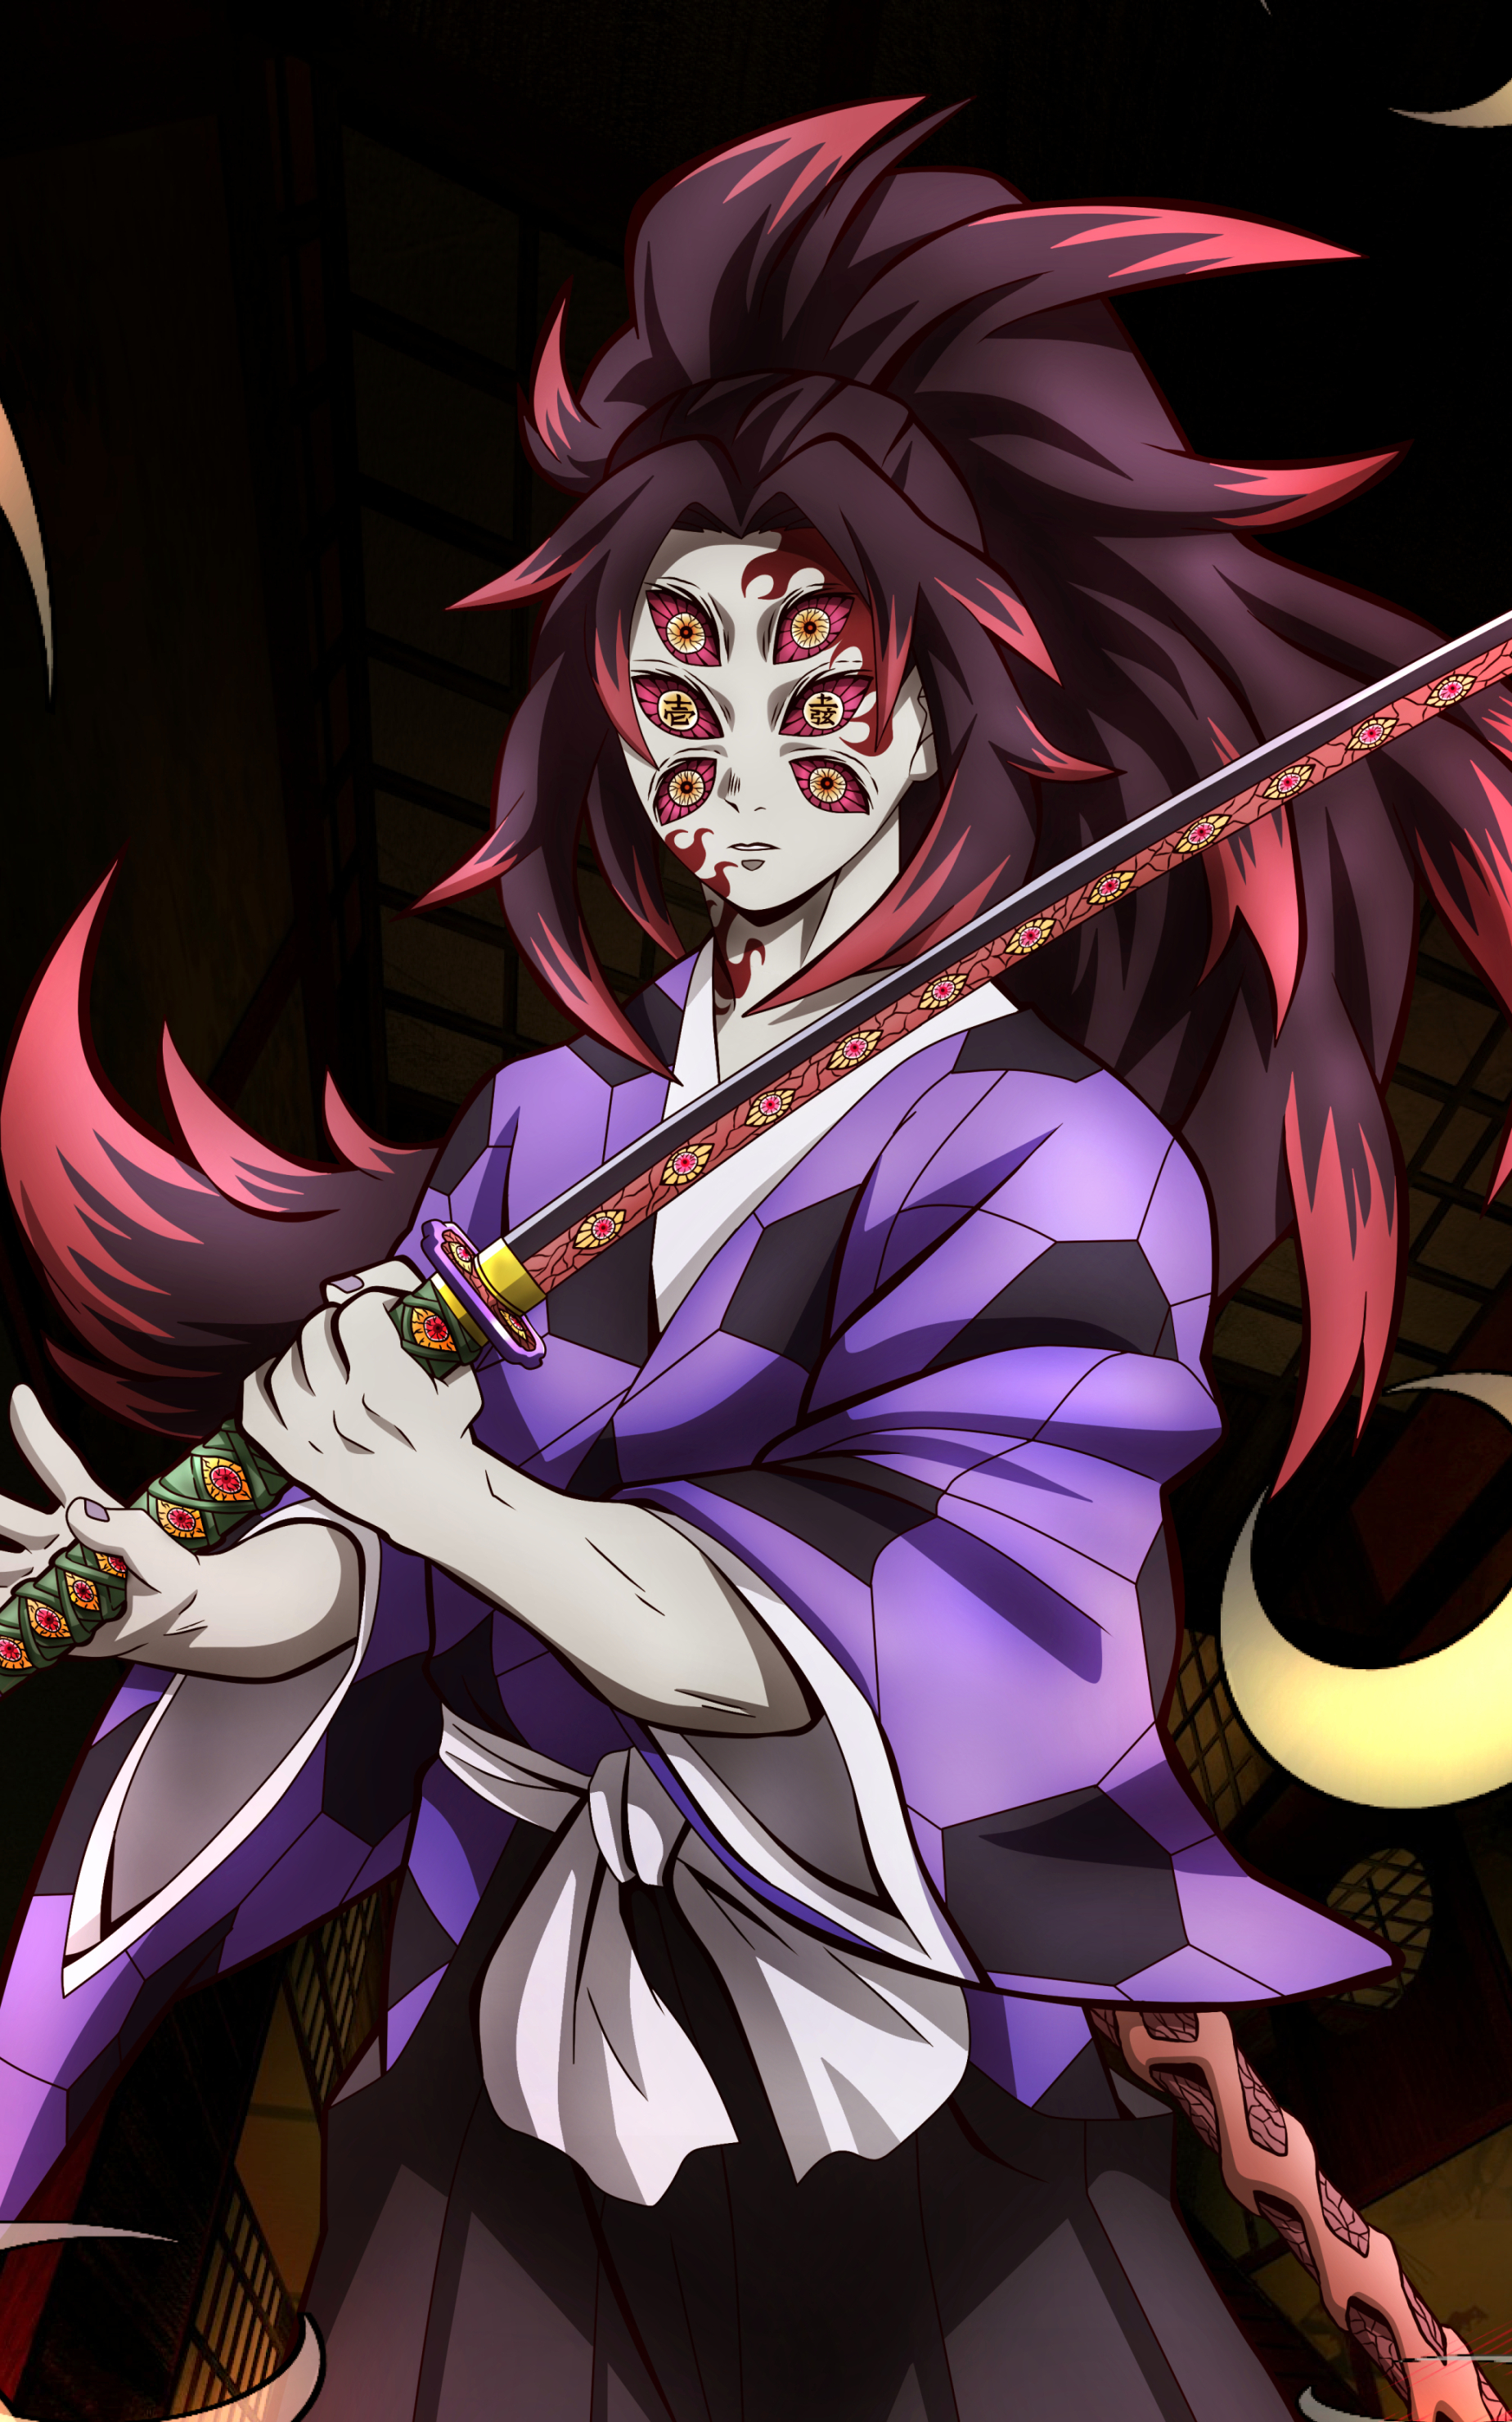 Baixar papel de parede para celular de Anime, Demon Slayer: Kimetsu No Yaiba, Kokushibo (Matador De Demônios) gratuito.